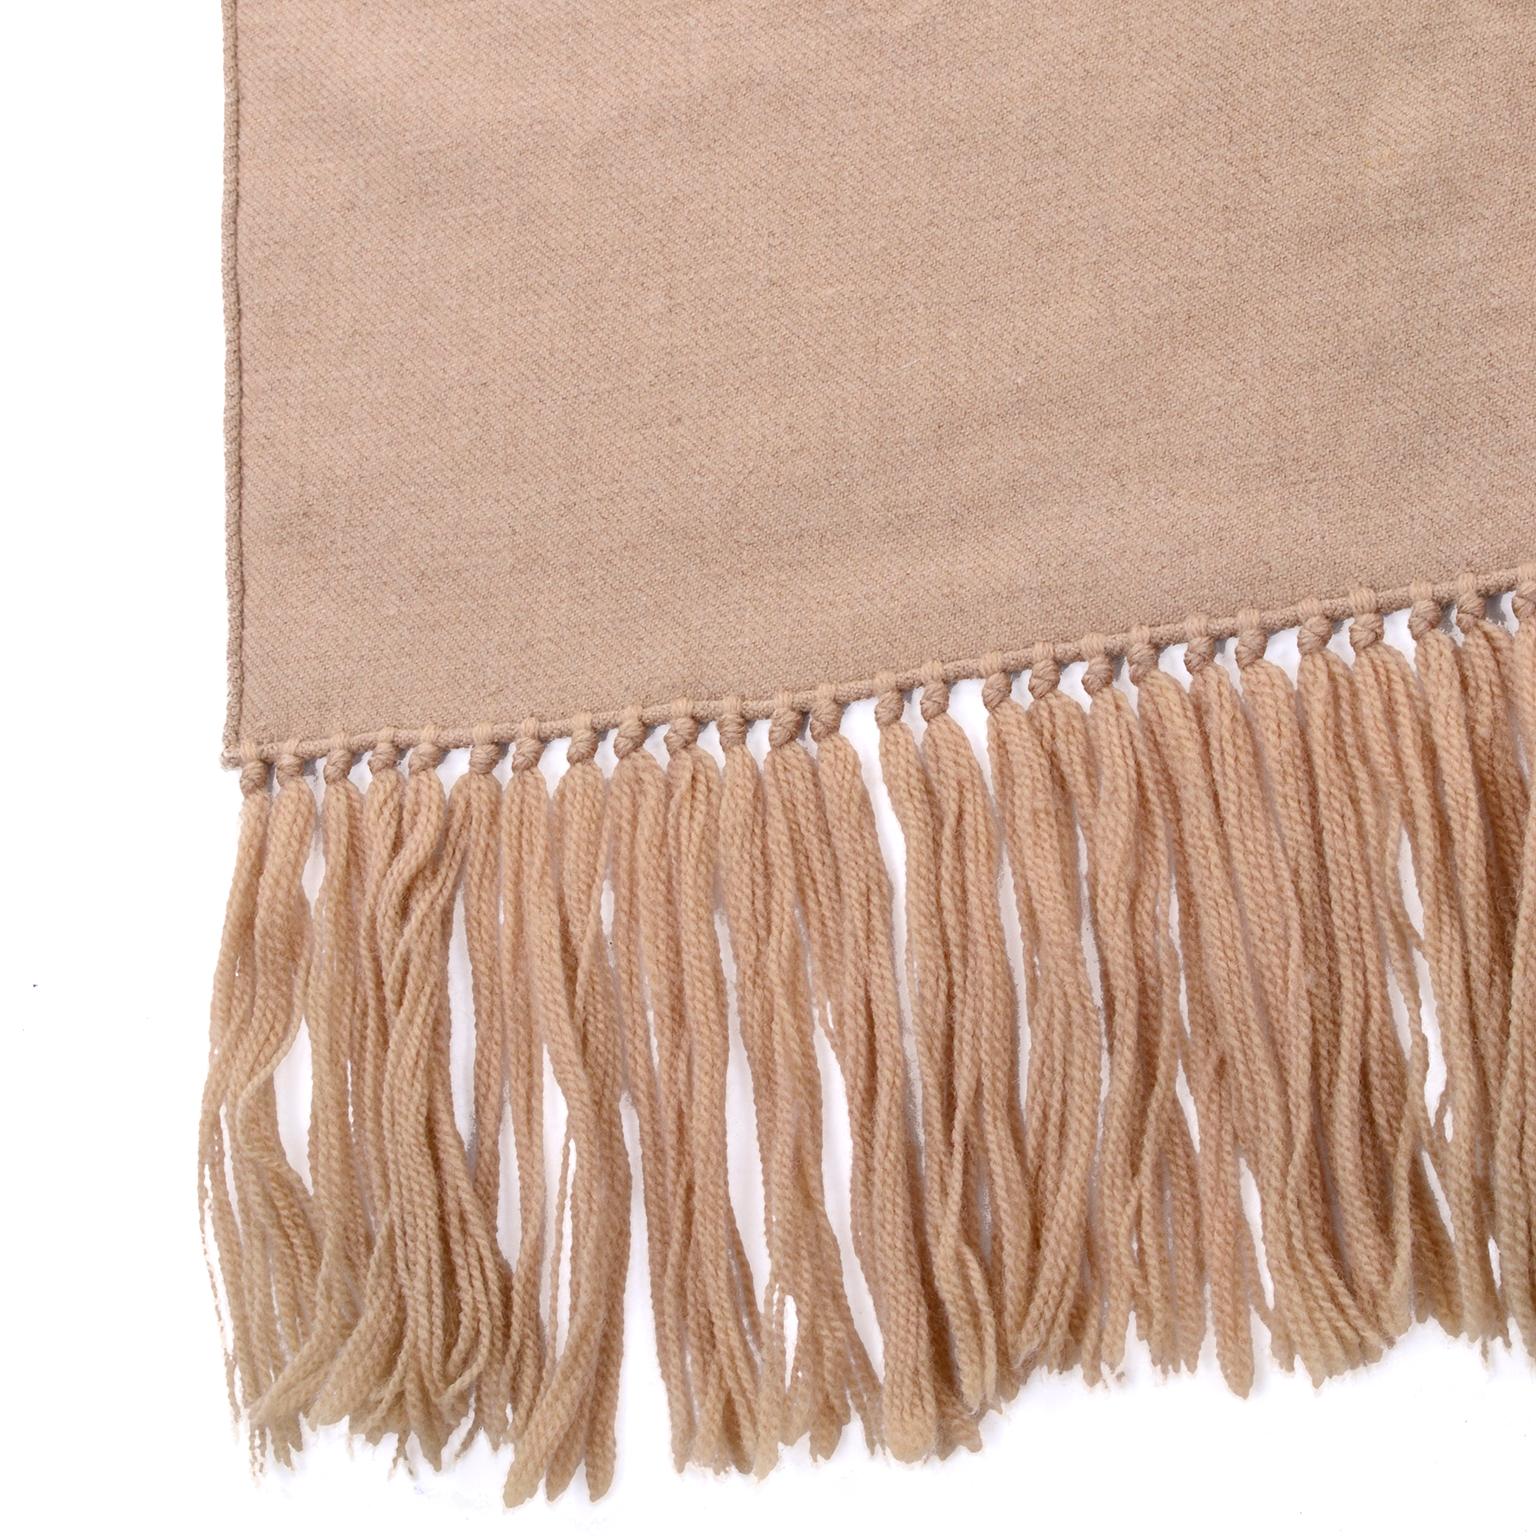 camel wool blanket for sale